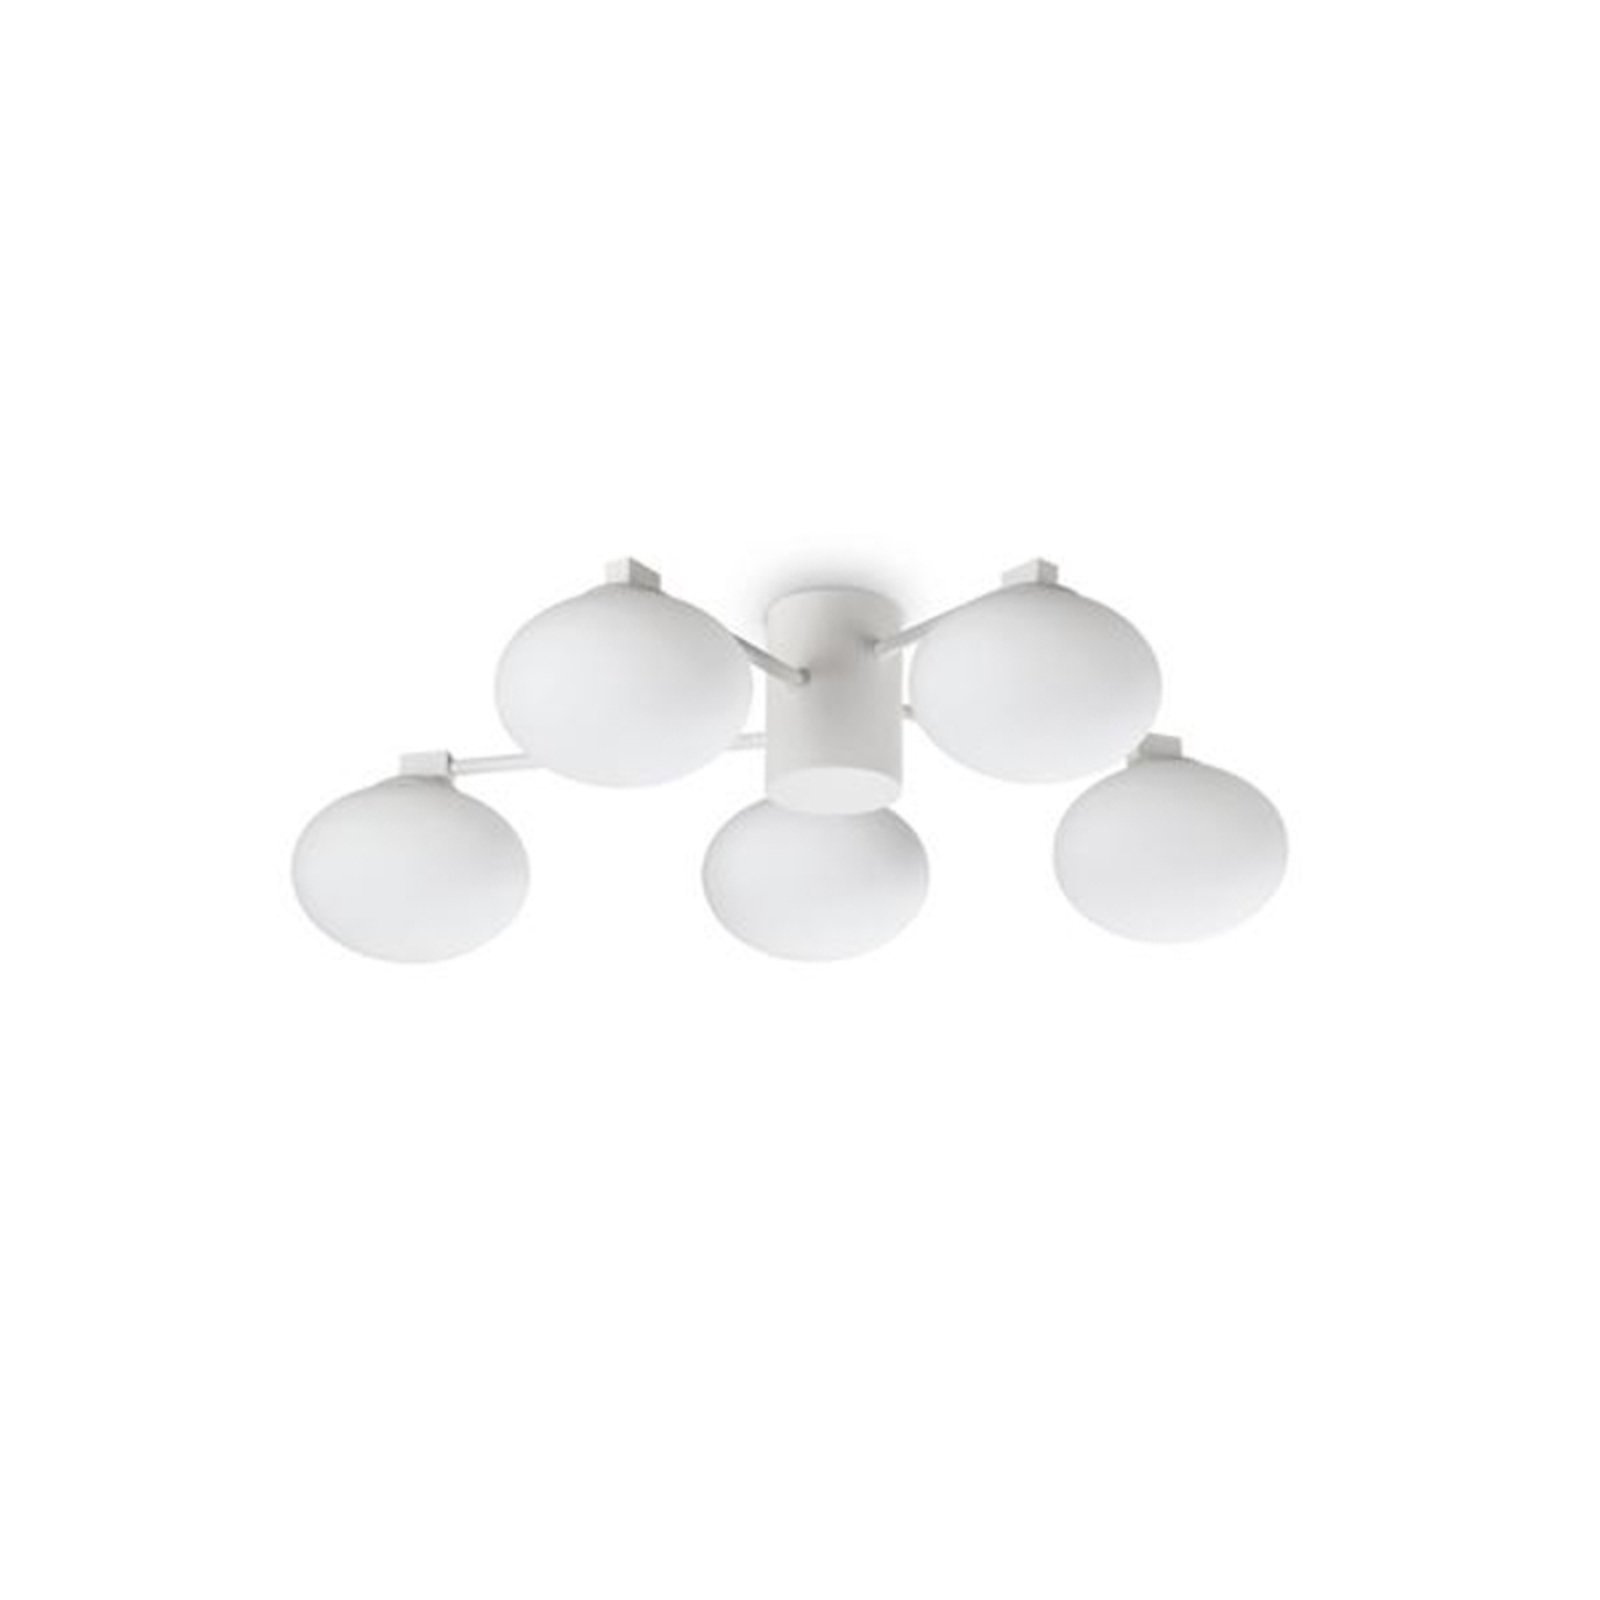 Ideal Lux Hermes stropné svietidlo, biele, 60 cm, 5 svetiel, sklo